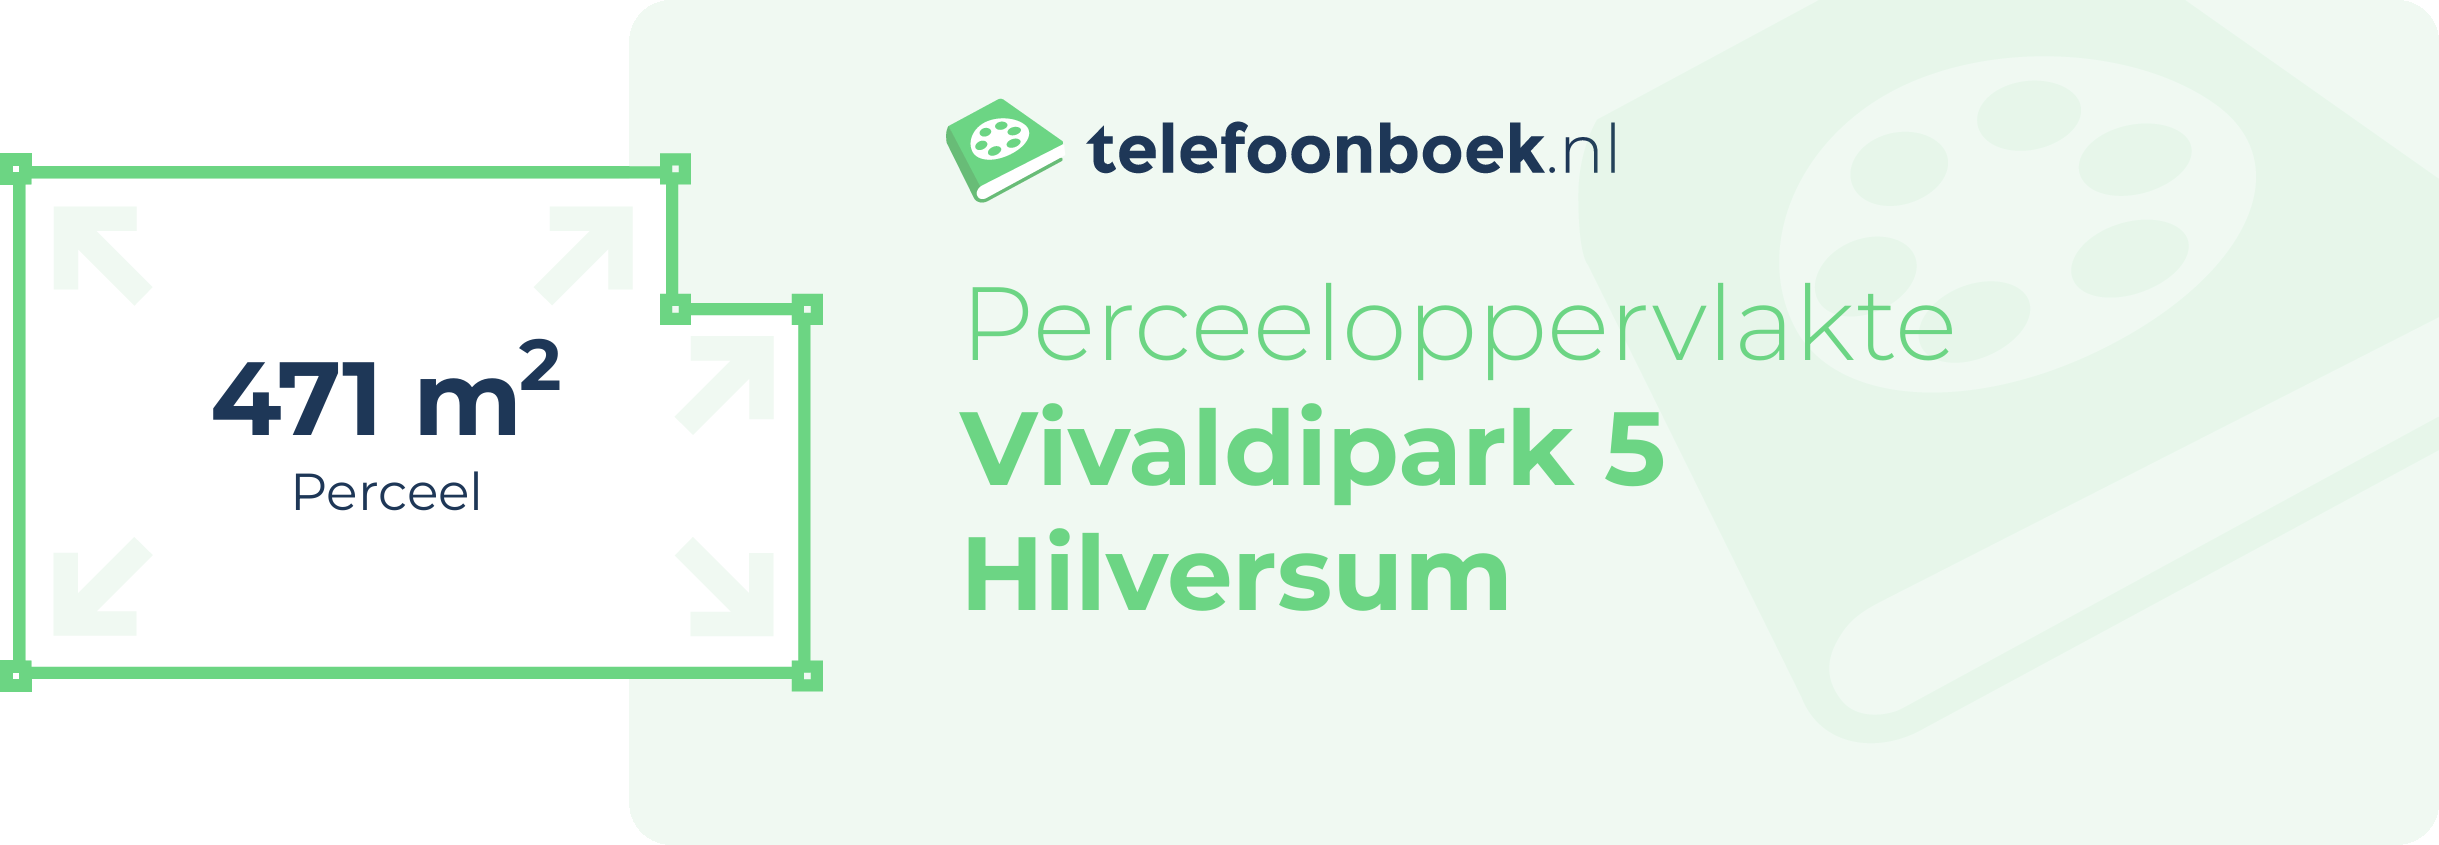 Perceeloppervlakte Vivaldipark 5 Hilversum